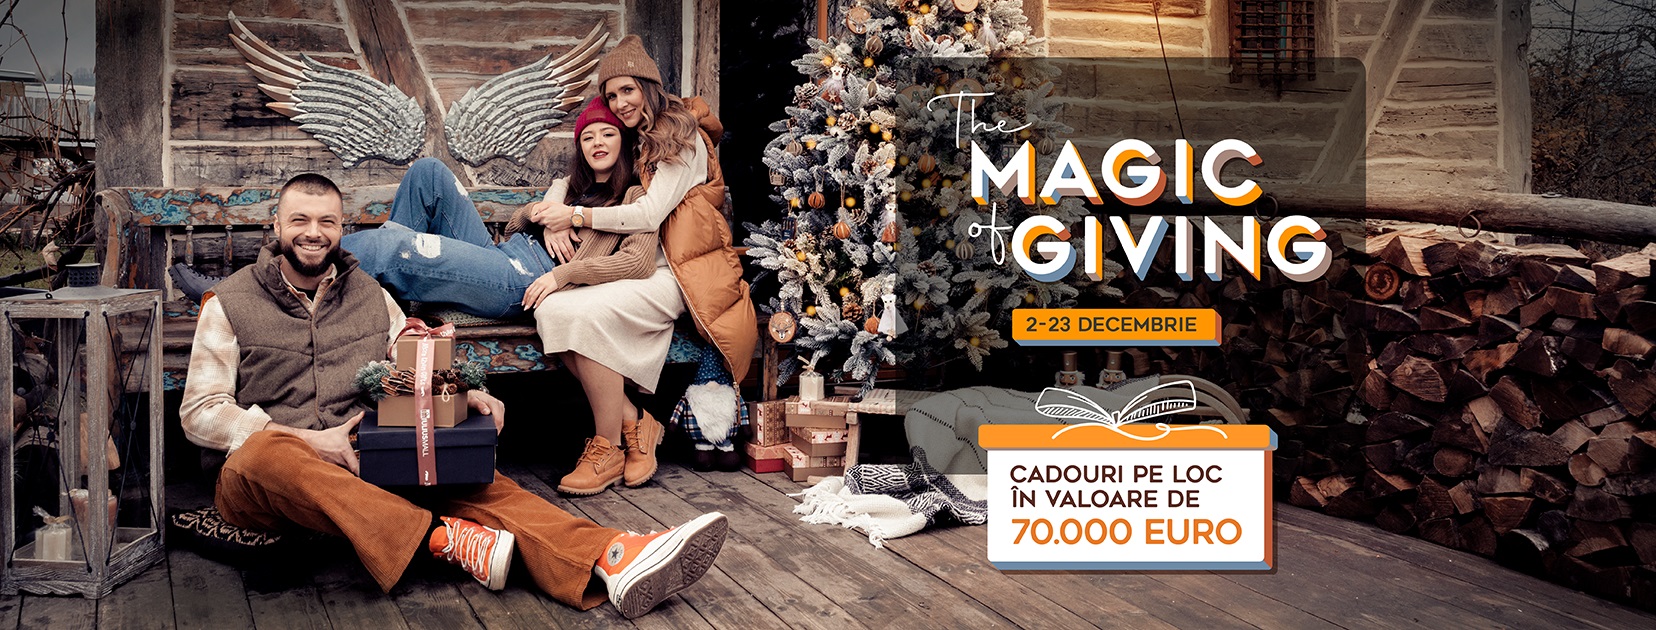  The magic of giving: Cadouri de poveste și premii de 70.000 euro la Iulius Mall Cluj